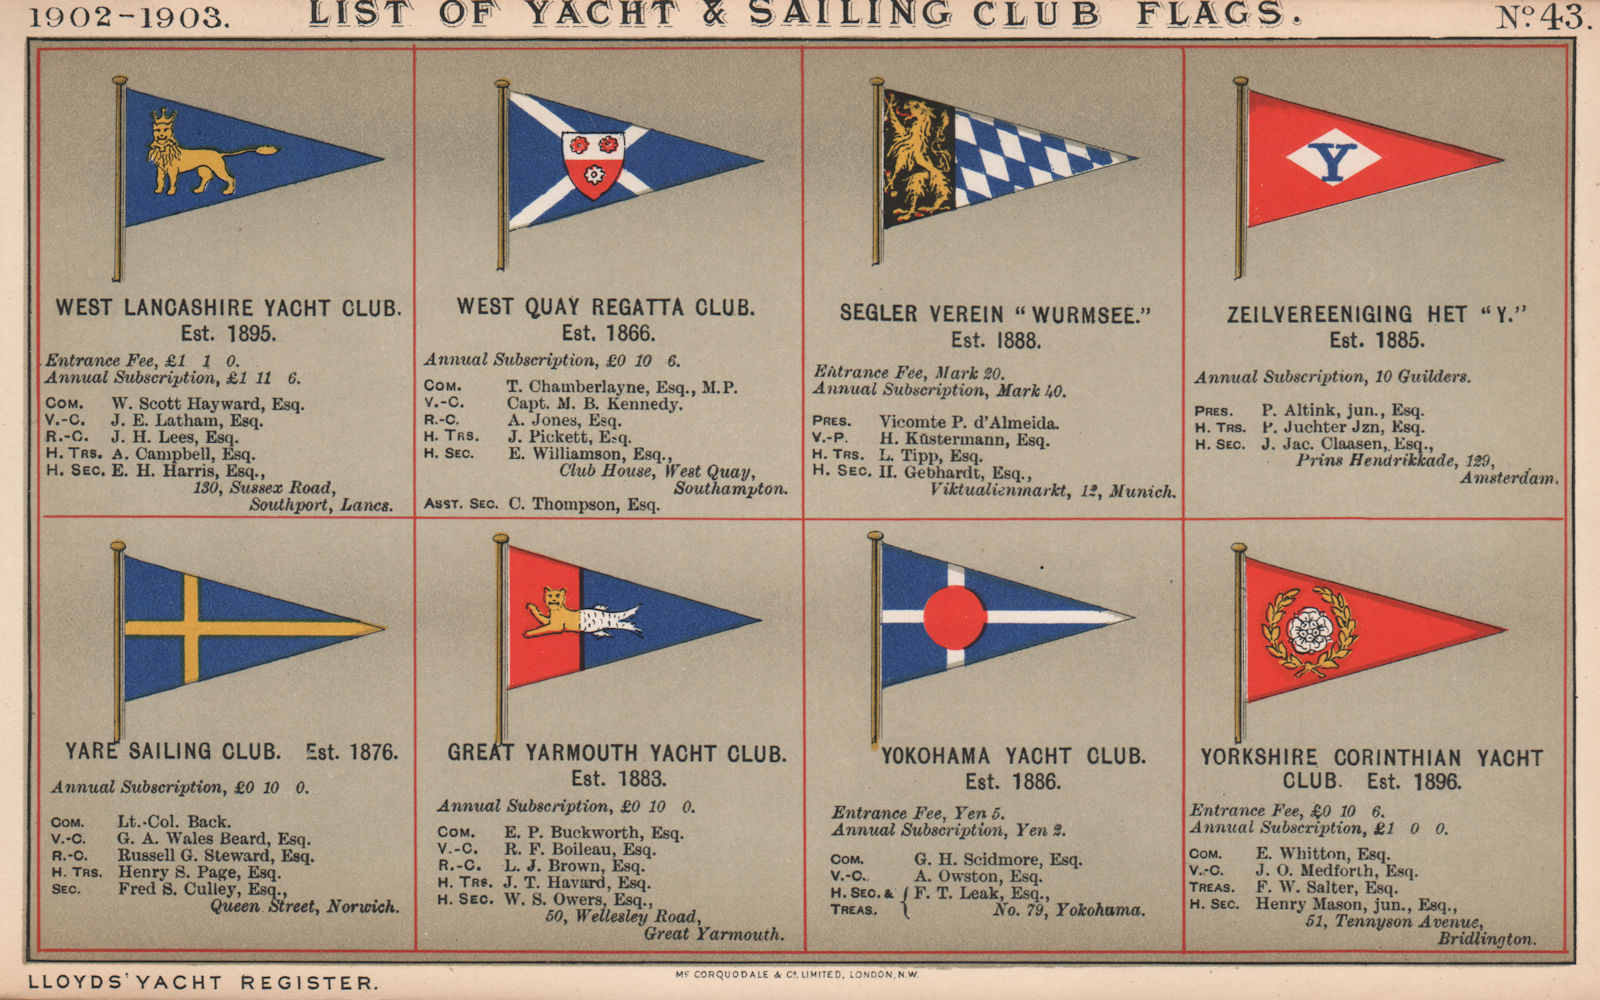 YACHT & SAILING CLUB FLAGS W-Y. West Lancashire - Yorkshire Corinthian 1902